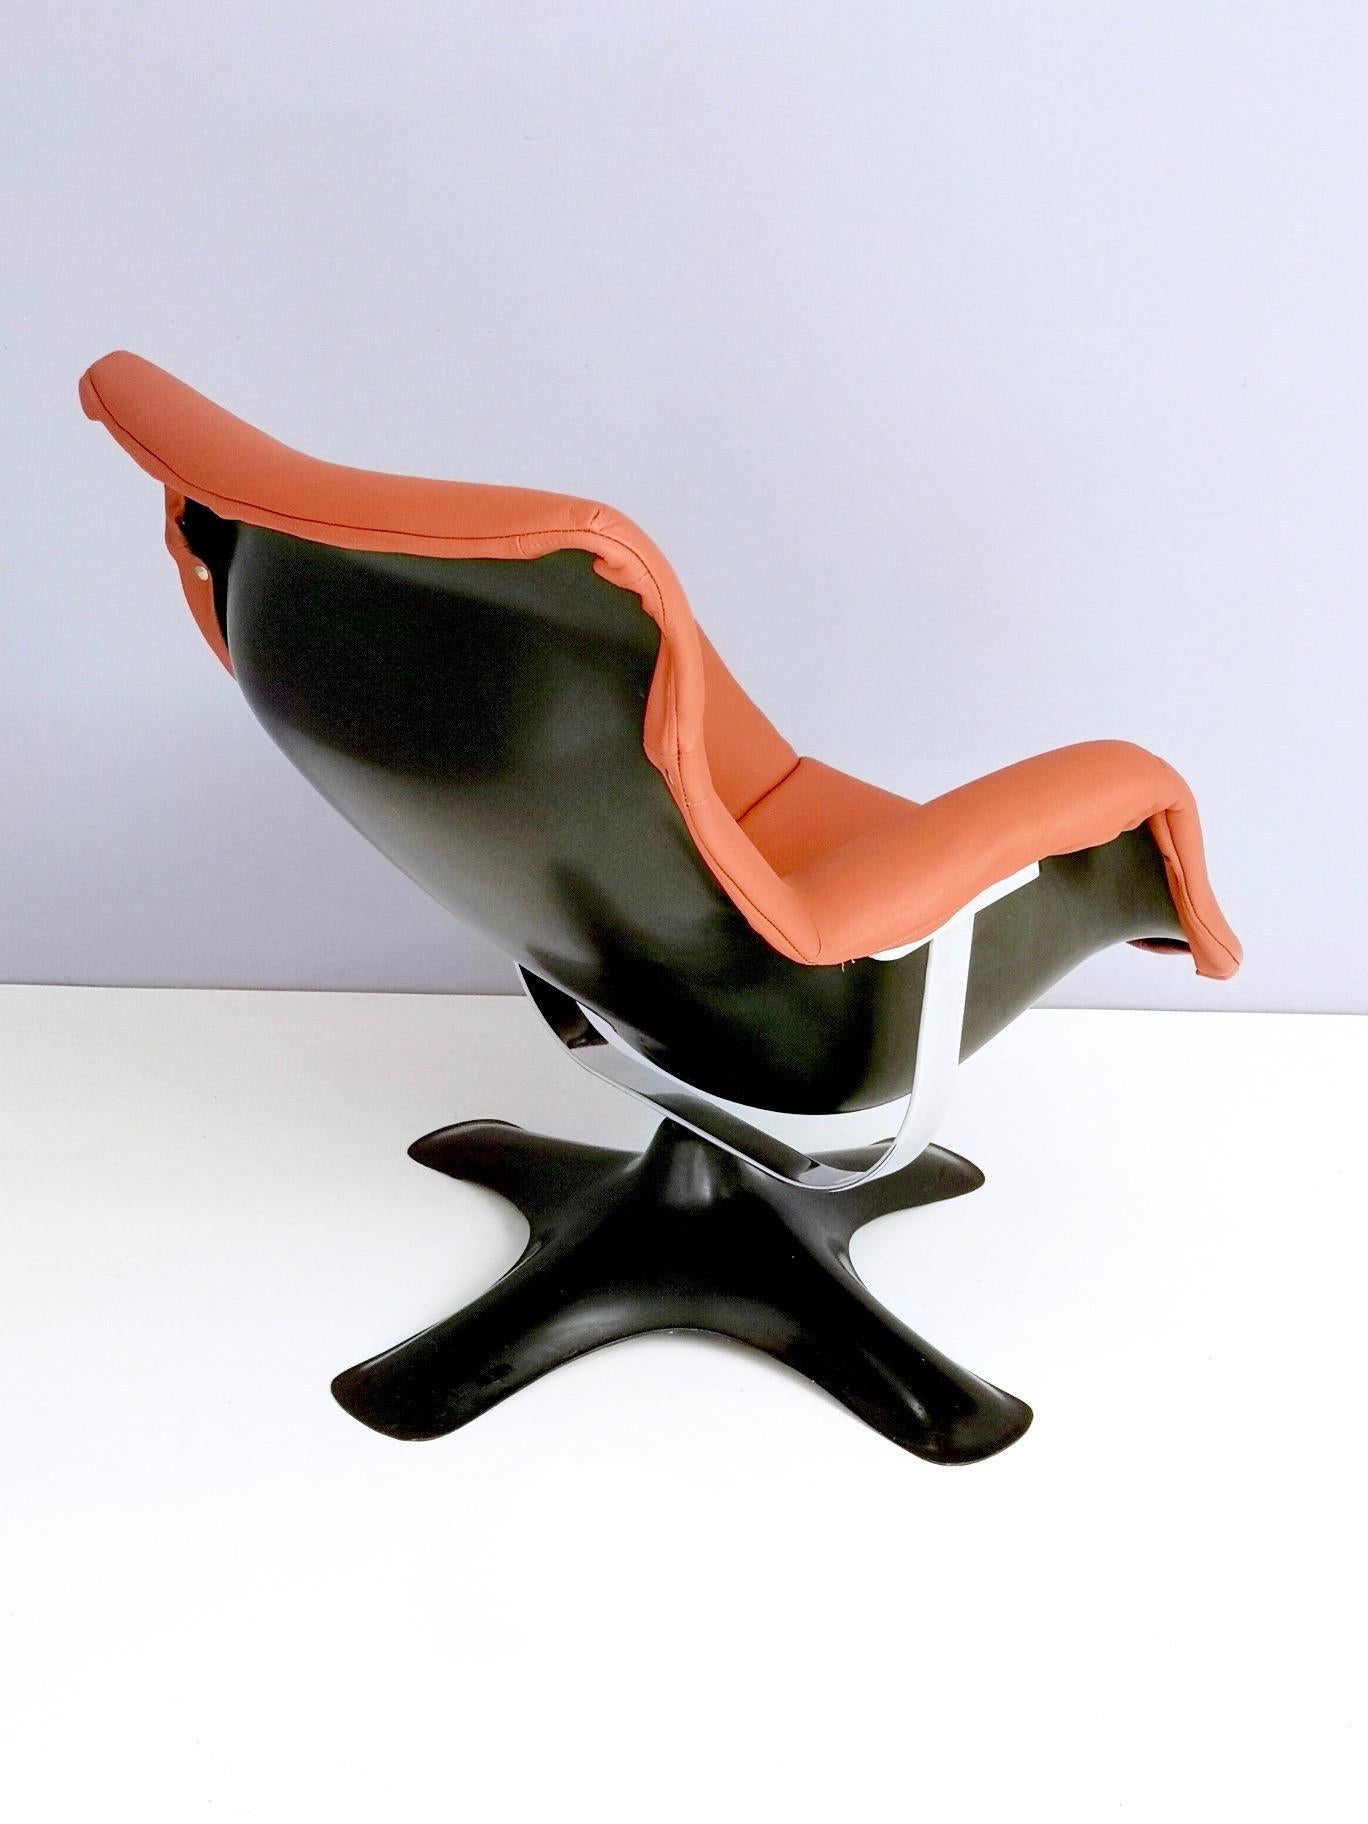 Space Age Karuselli Lounge Chair by Yrjö Kukkapuro for Haimi in Orange Leather, 1960s